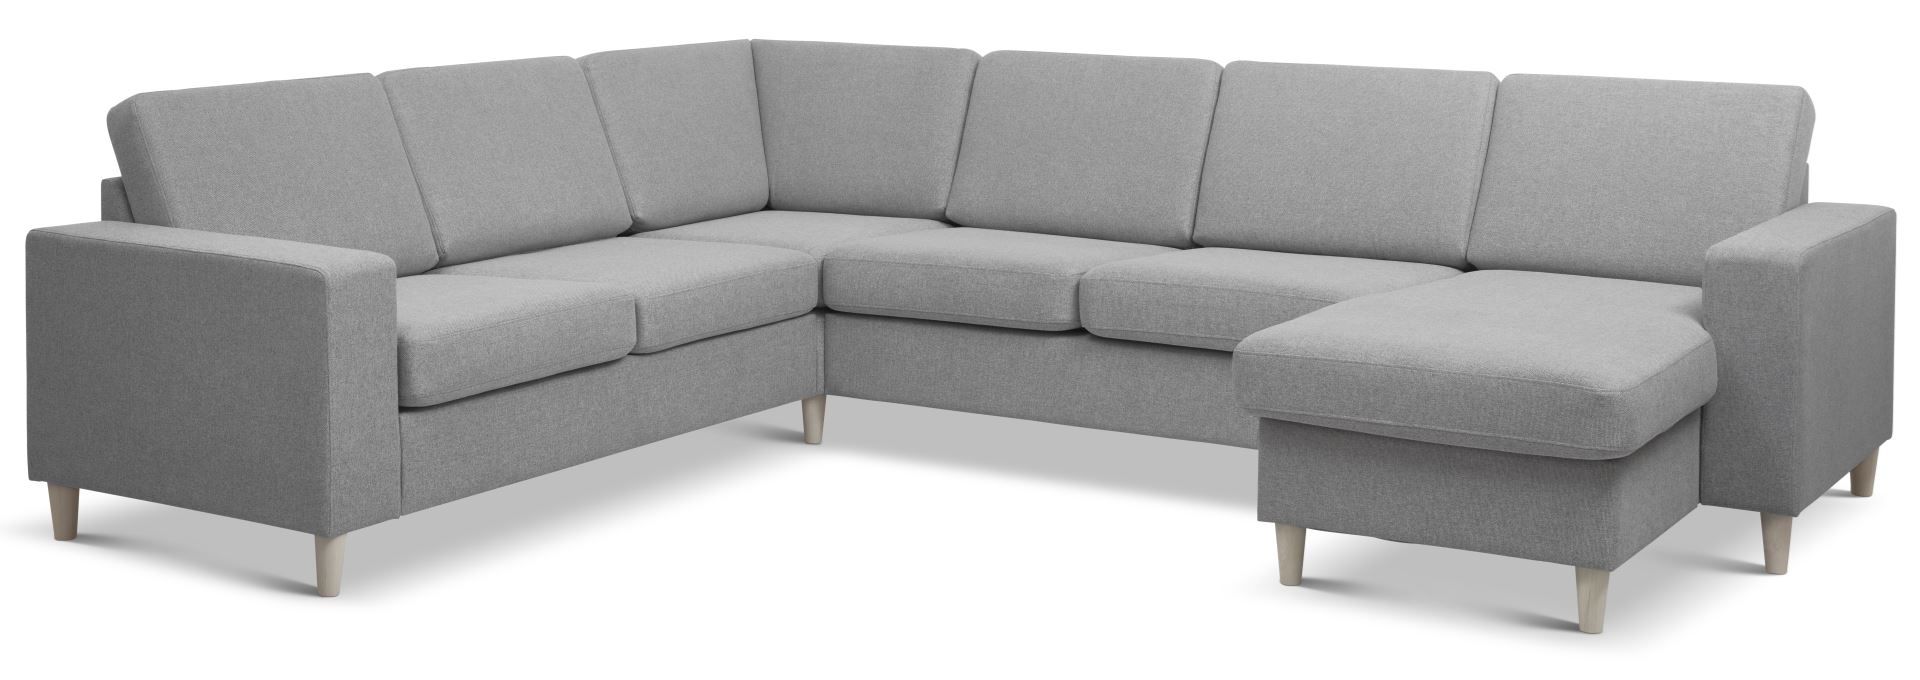 Pan set 6 U 2C3D sofa med chaiselong - grå polyester stof og natur træ